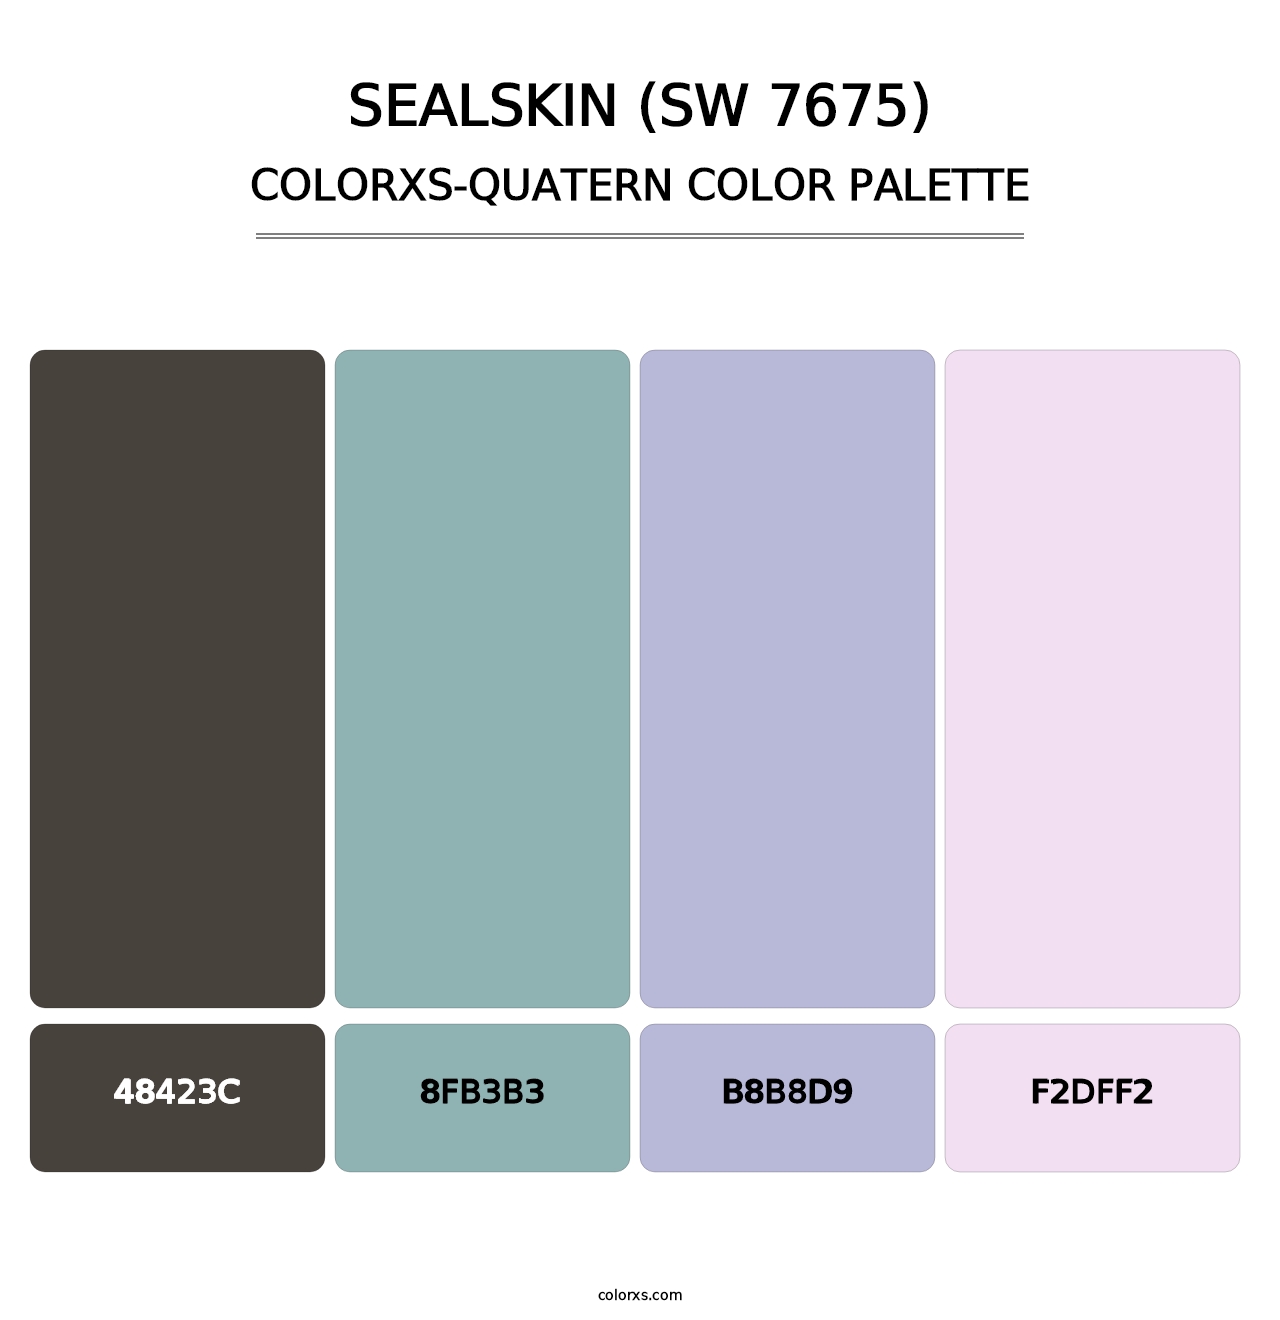 Sealskin (SW 7675) - Colorxs Quatern Palette